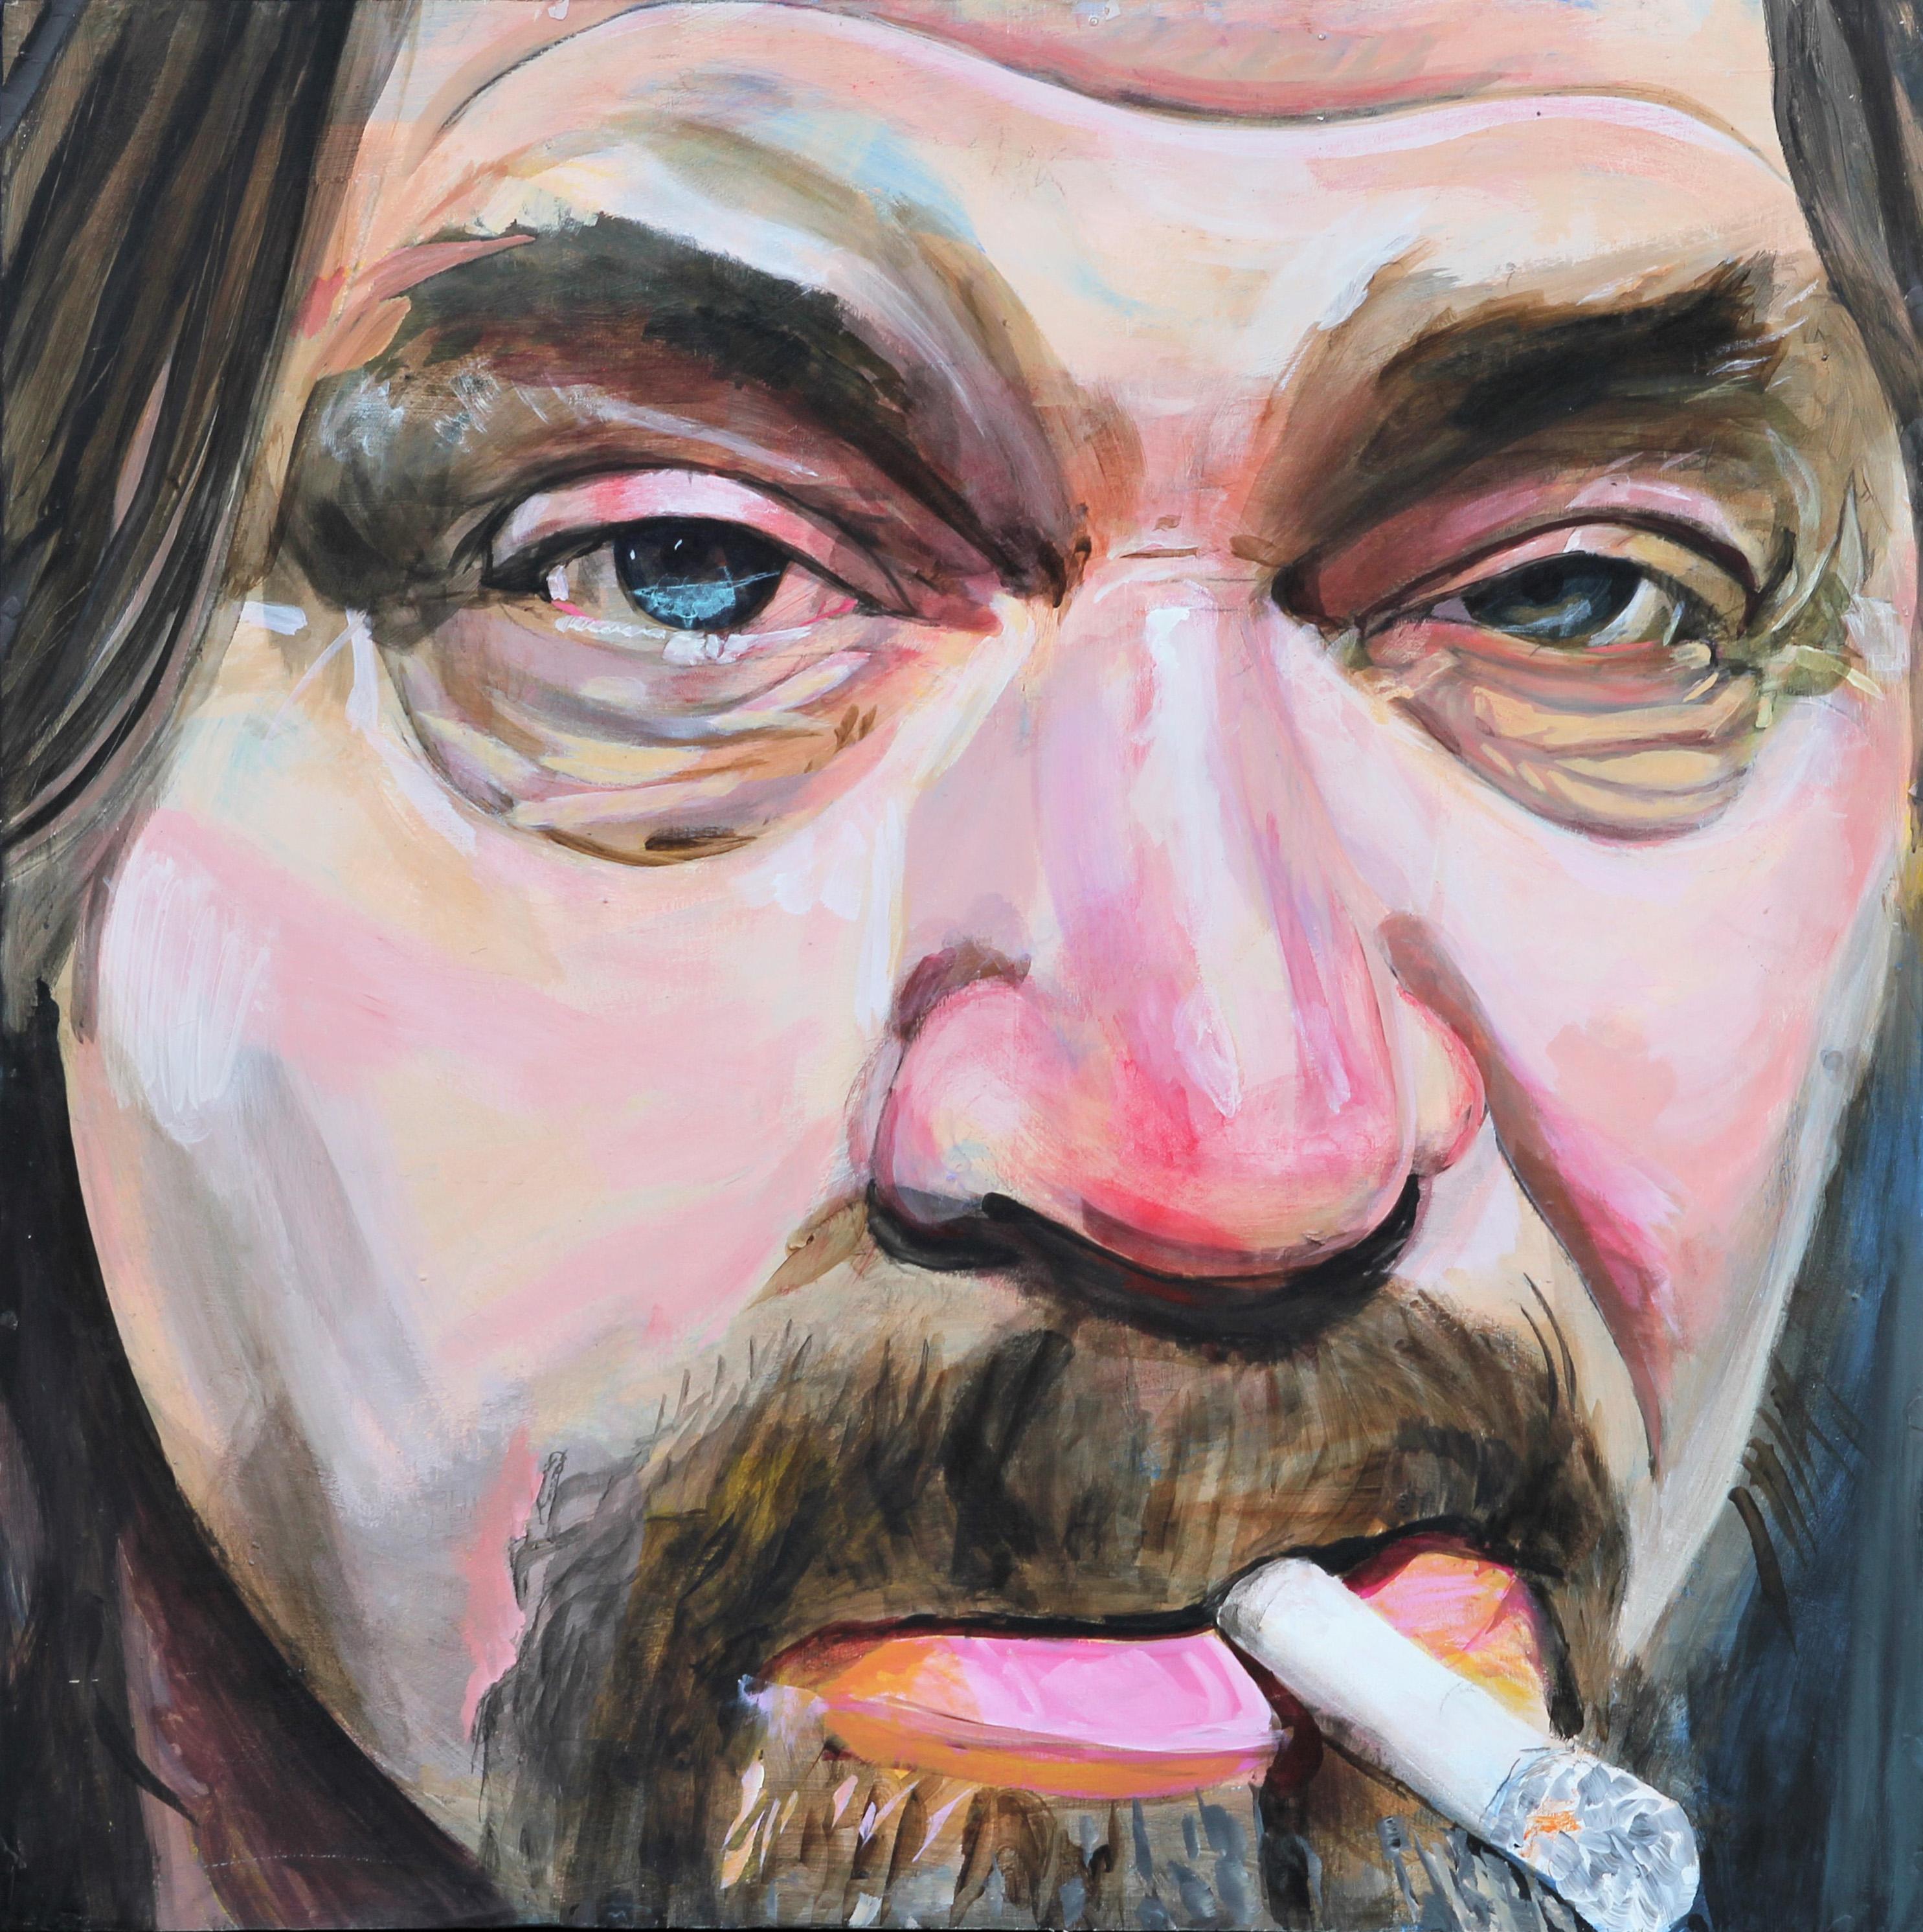 Matt Aston Abstract Painting - Contemporary Realist Chuck Close Style Smoking Self Portrait Painting